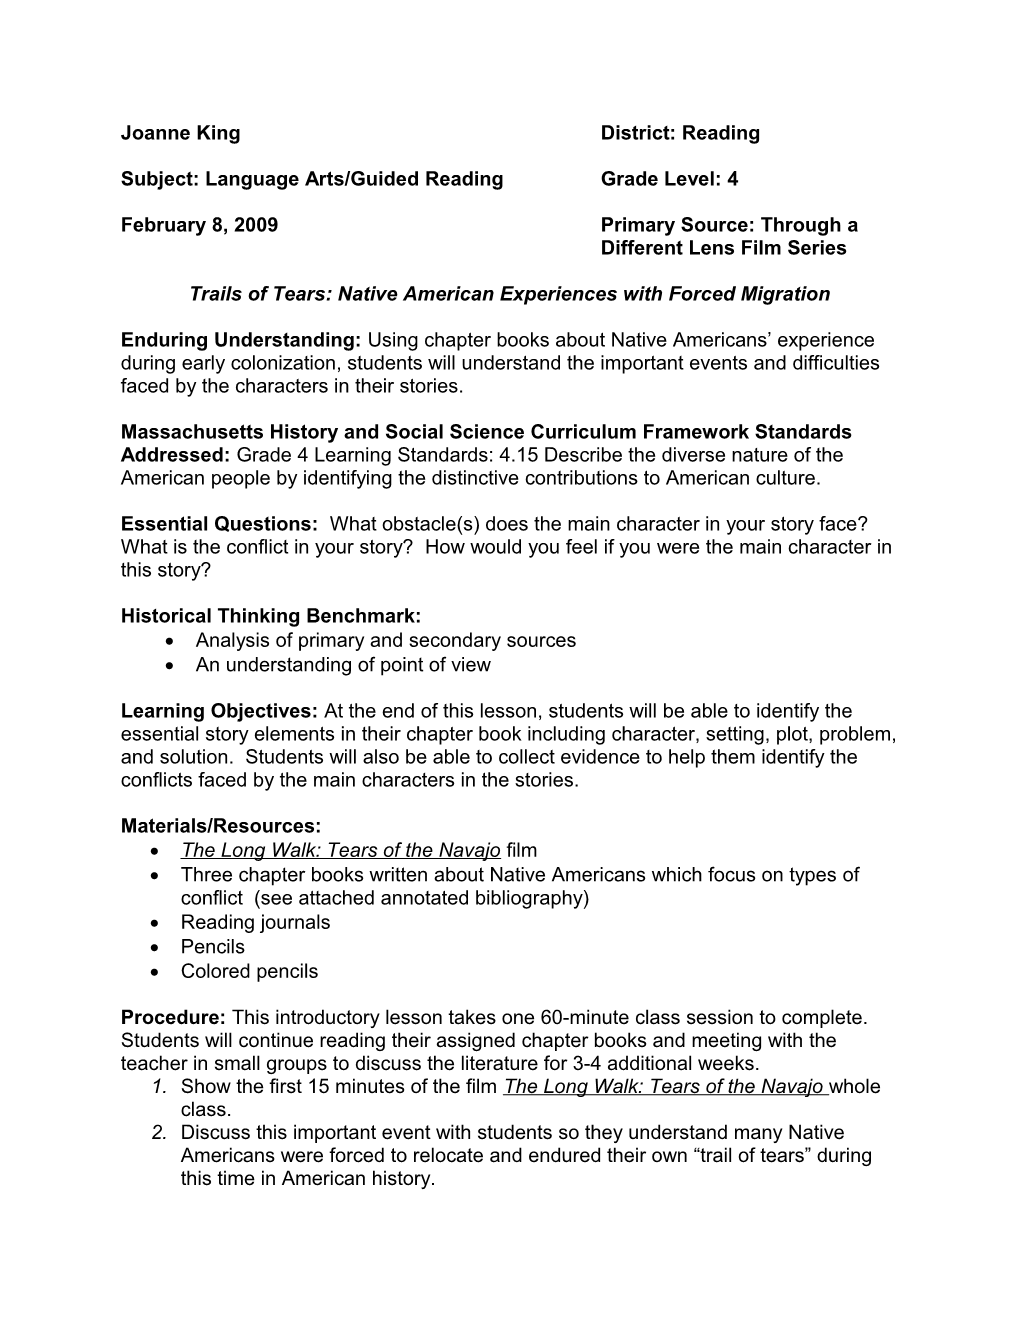 Subject: Language Arts/Guided Reading Grade Level: 4